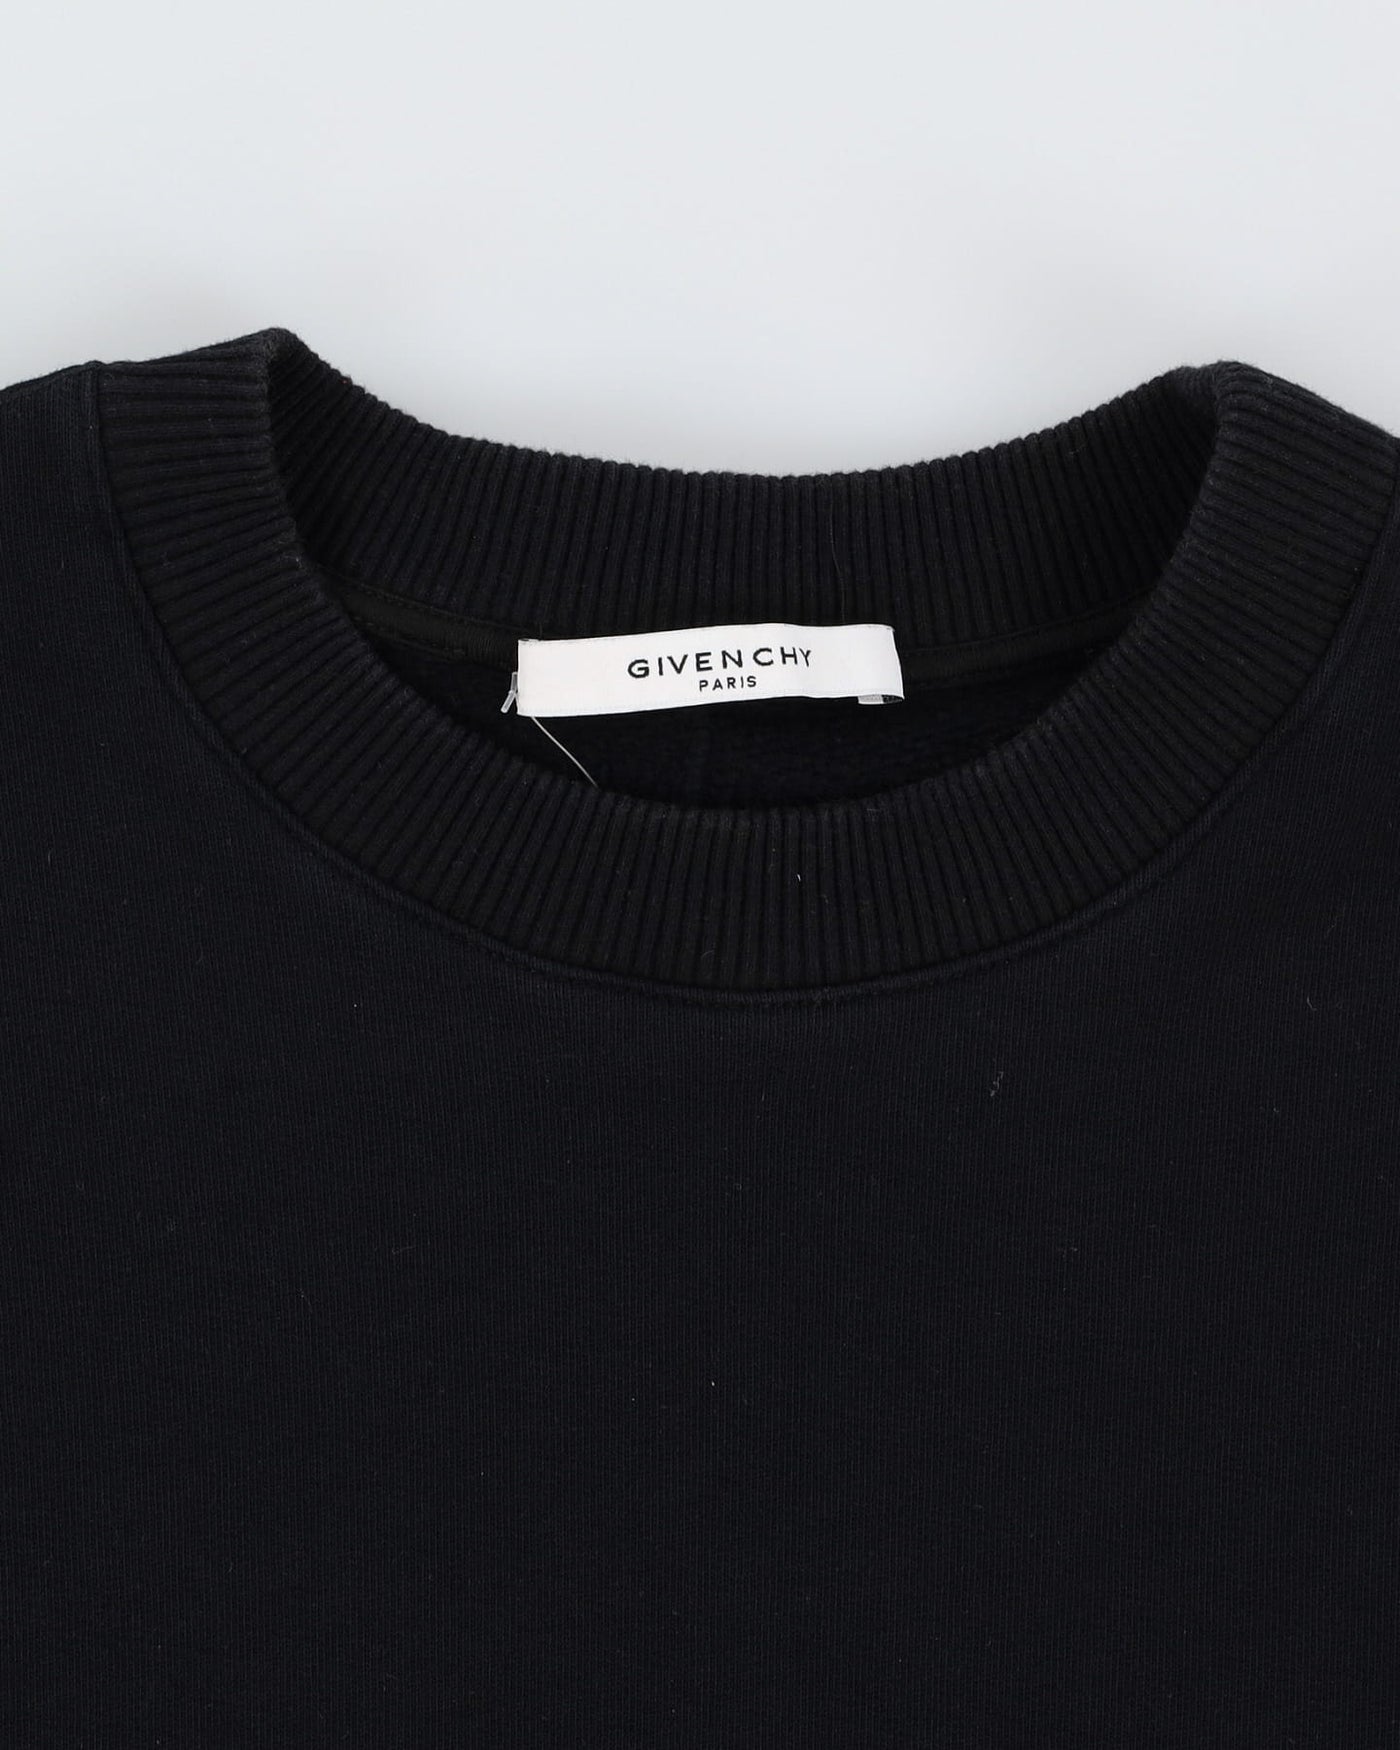 Givenchy Monkey Graphic Black Sweatshirt - L